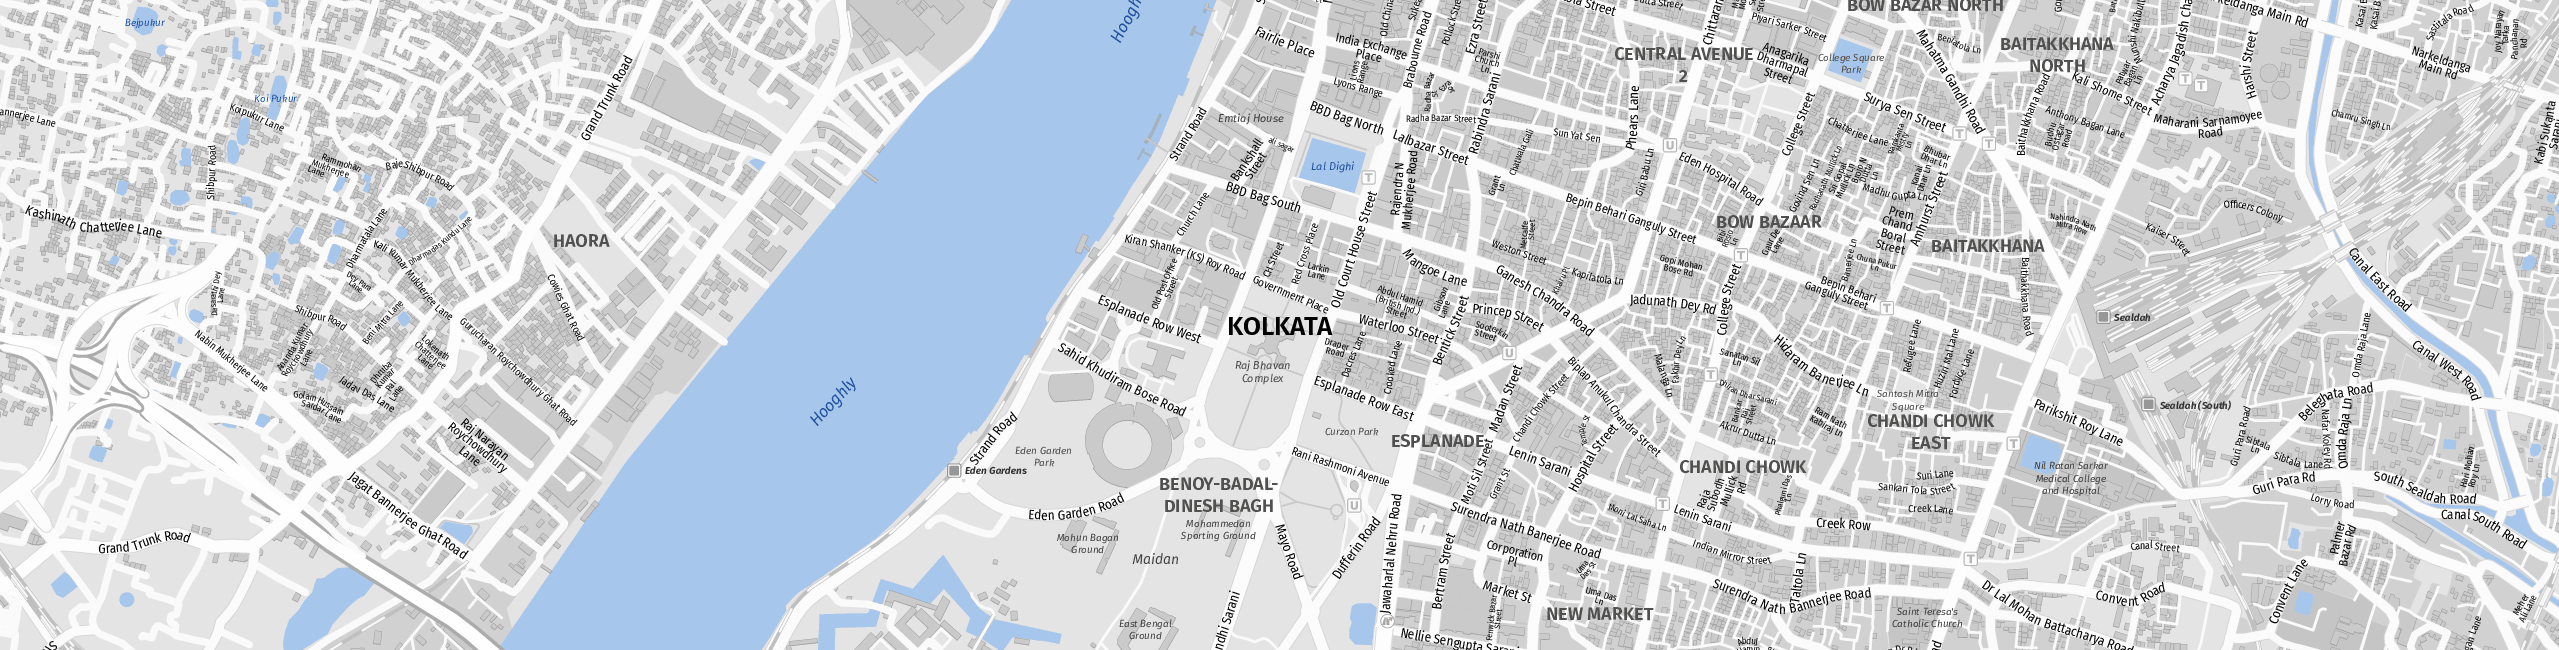 Stadtplan Kalkutta zum Downloaden.